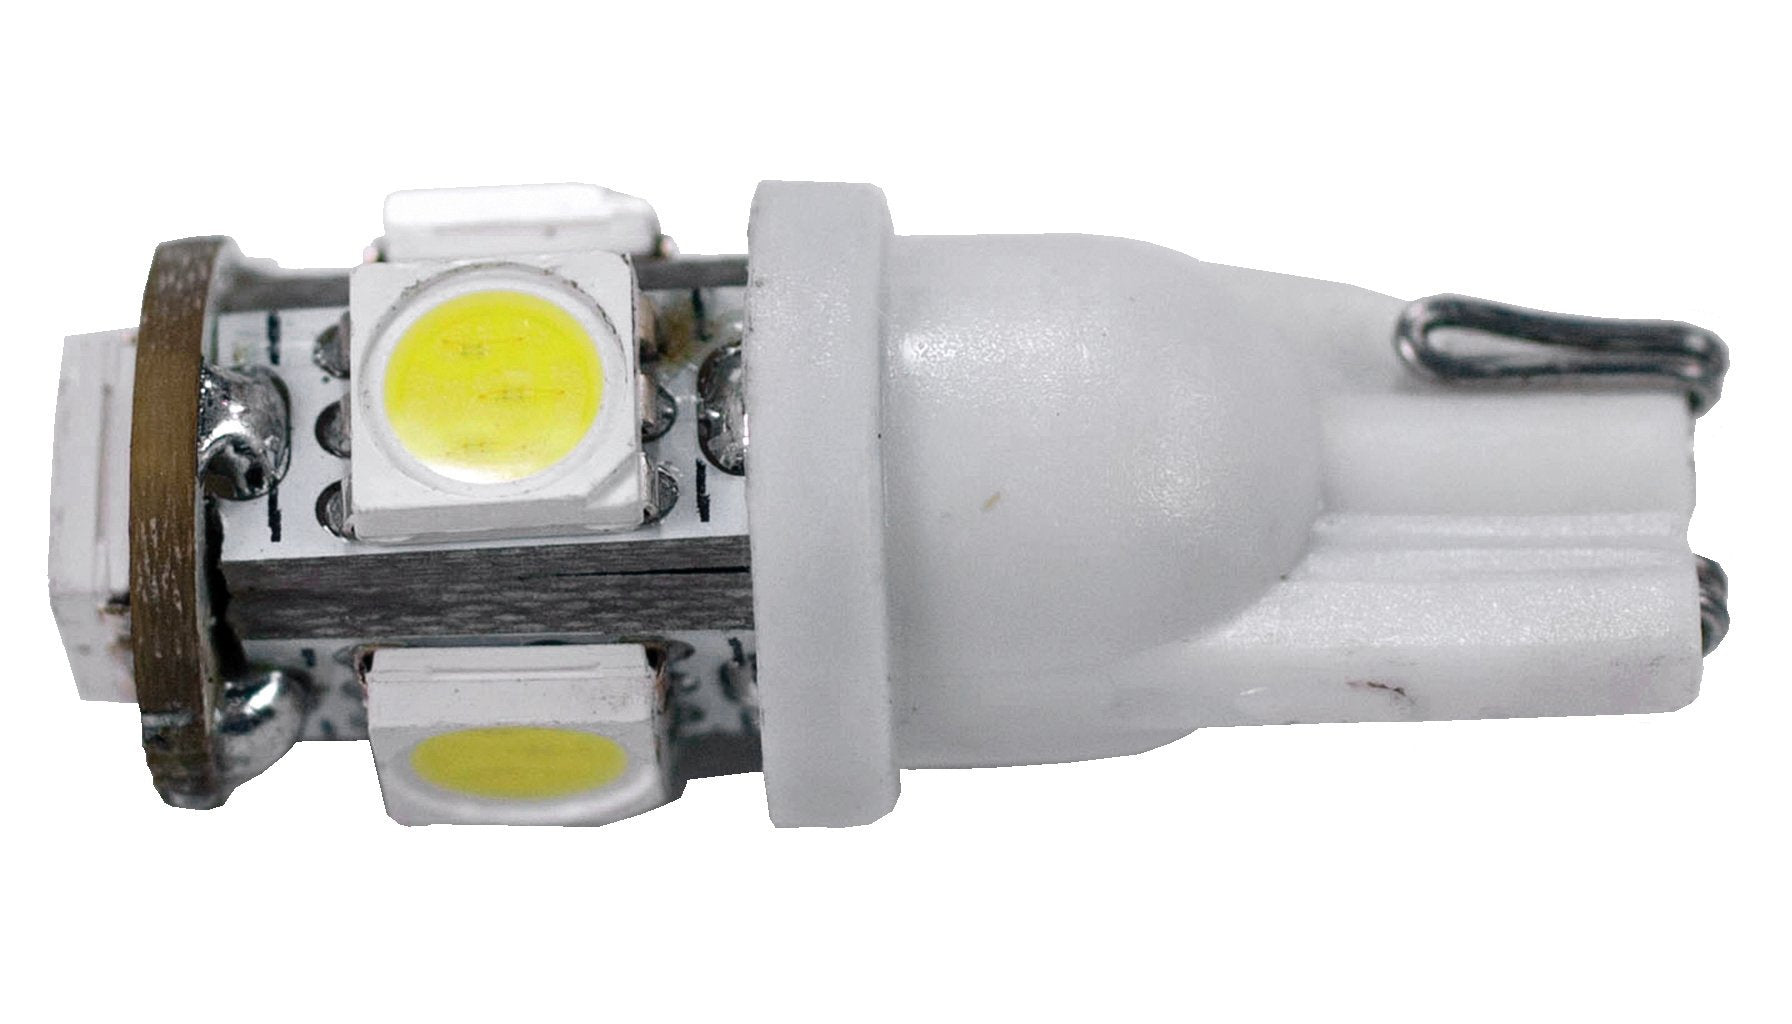 Arcon 50558 Bright White 12 Volt 5-LED Bulb, (Pack of 6)